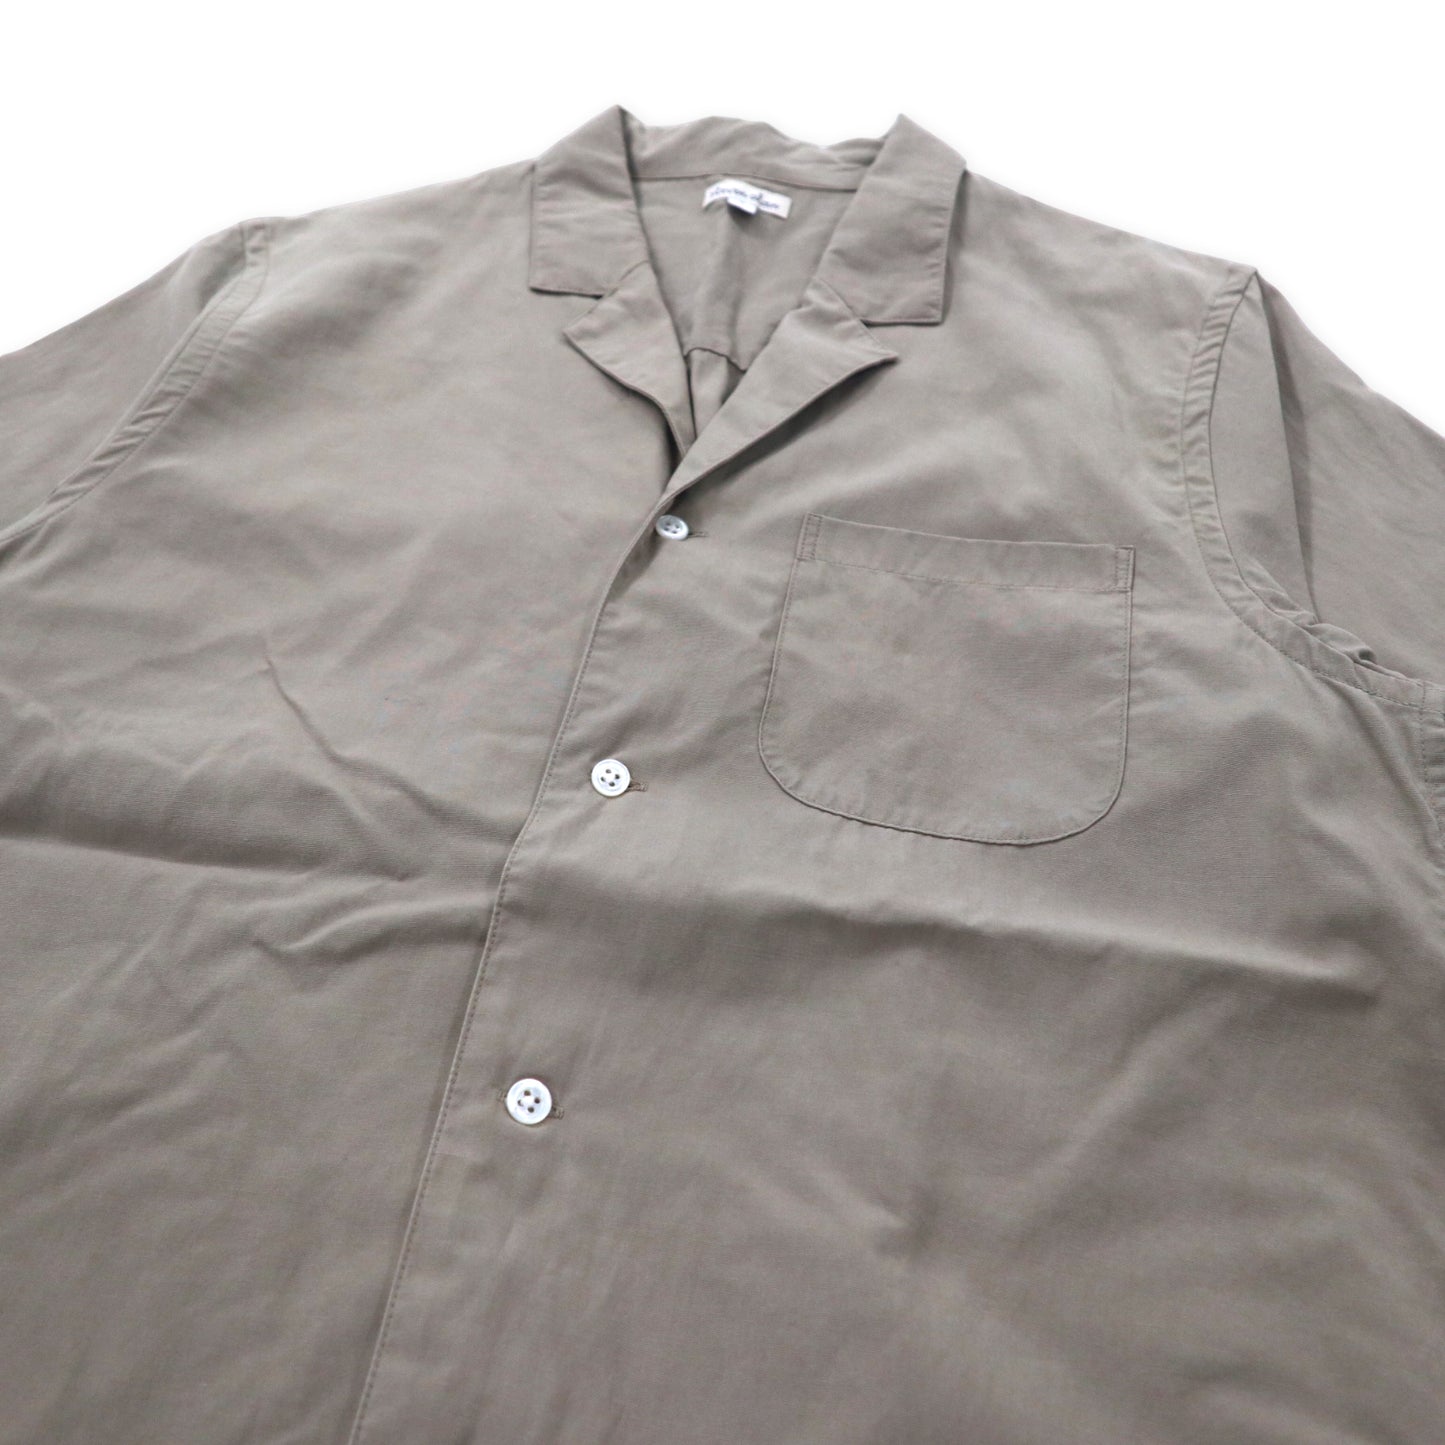 steven alan オープンカラーシャツ 半袖シャツ S グレー リヨセル コットン CTN/LYCL TRAD OPENCOLLAR SSL 8116-299-0058 日本製